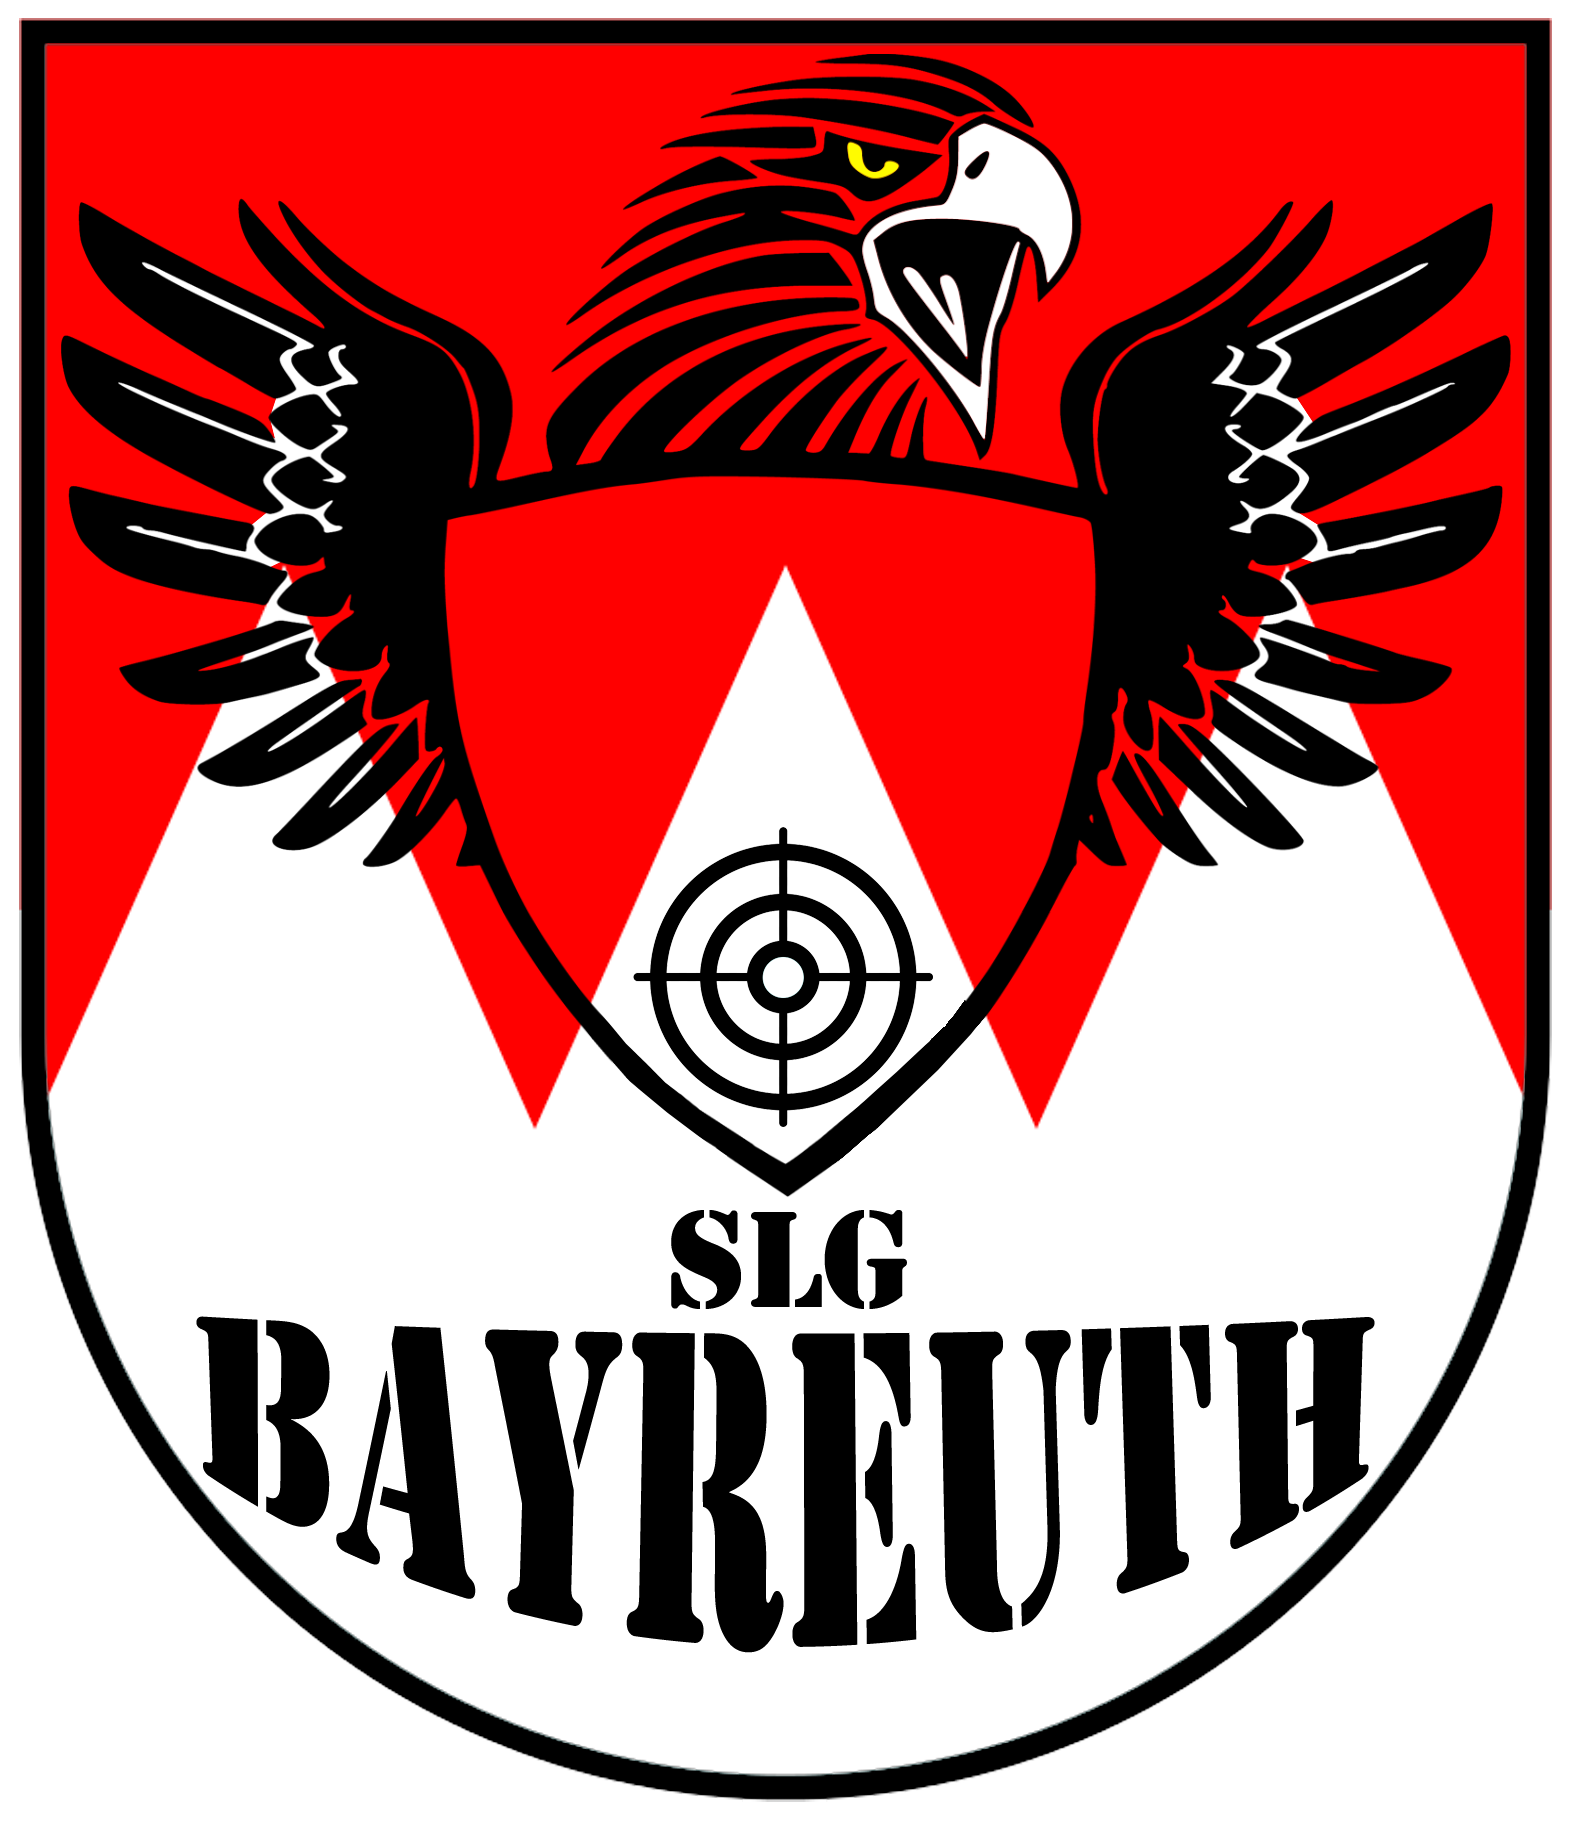 SLG Bayreuth